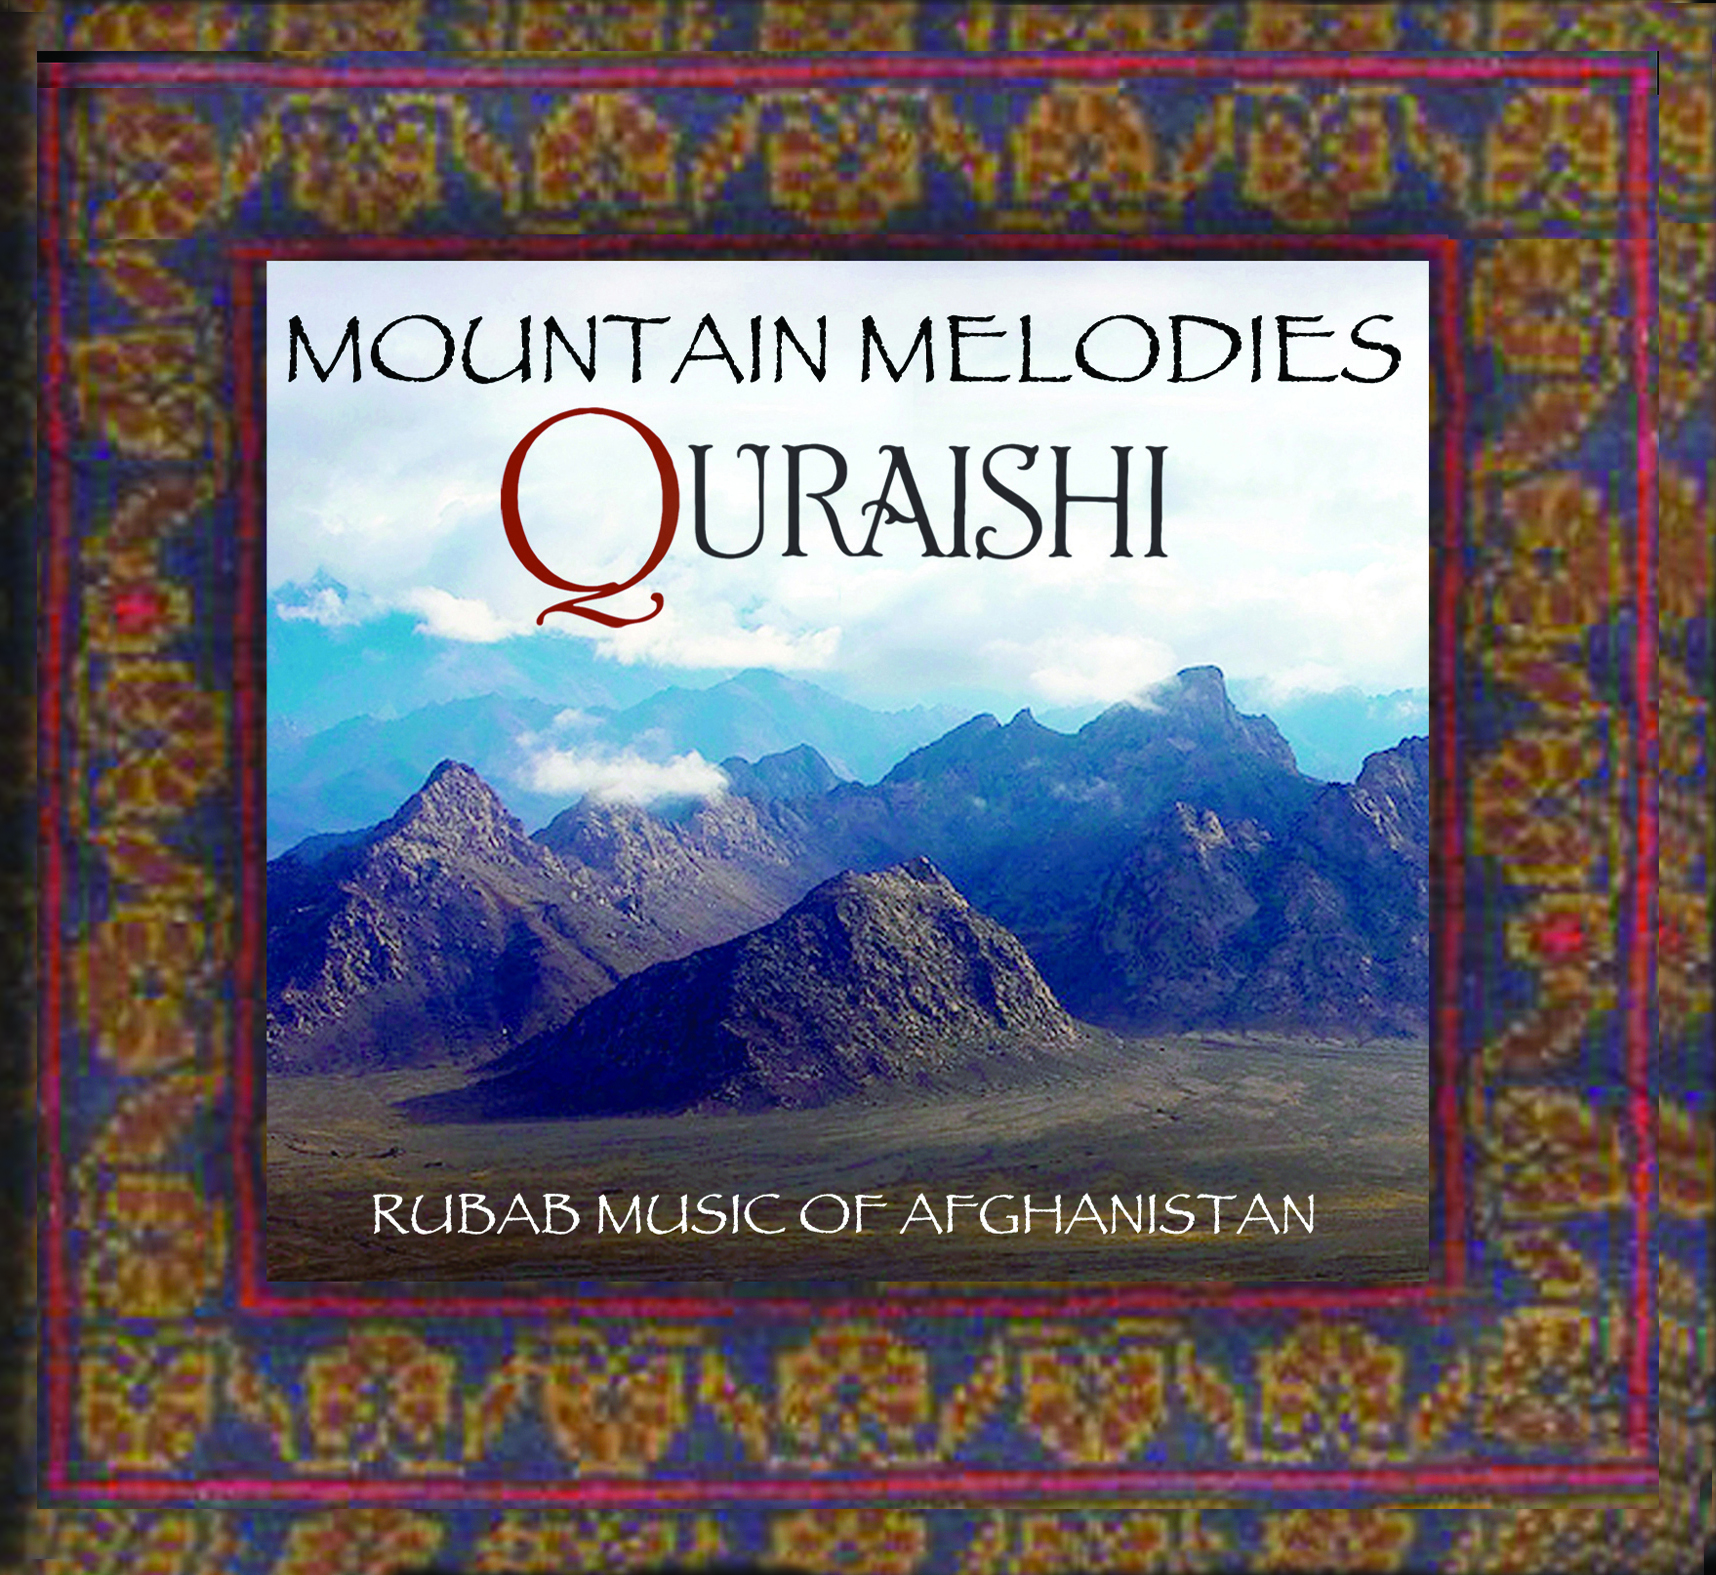 Cover of Quraishi's album  "Mountain Music" (photo: Evergreene Music)